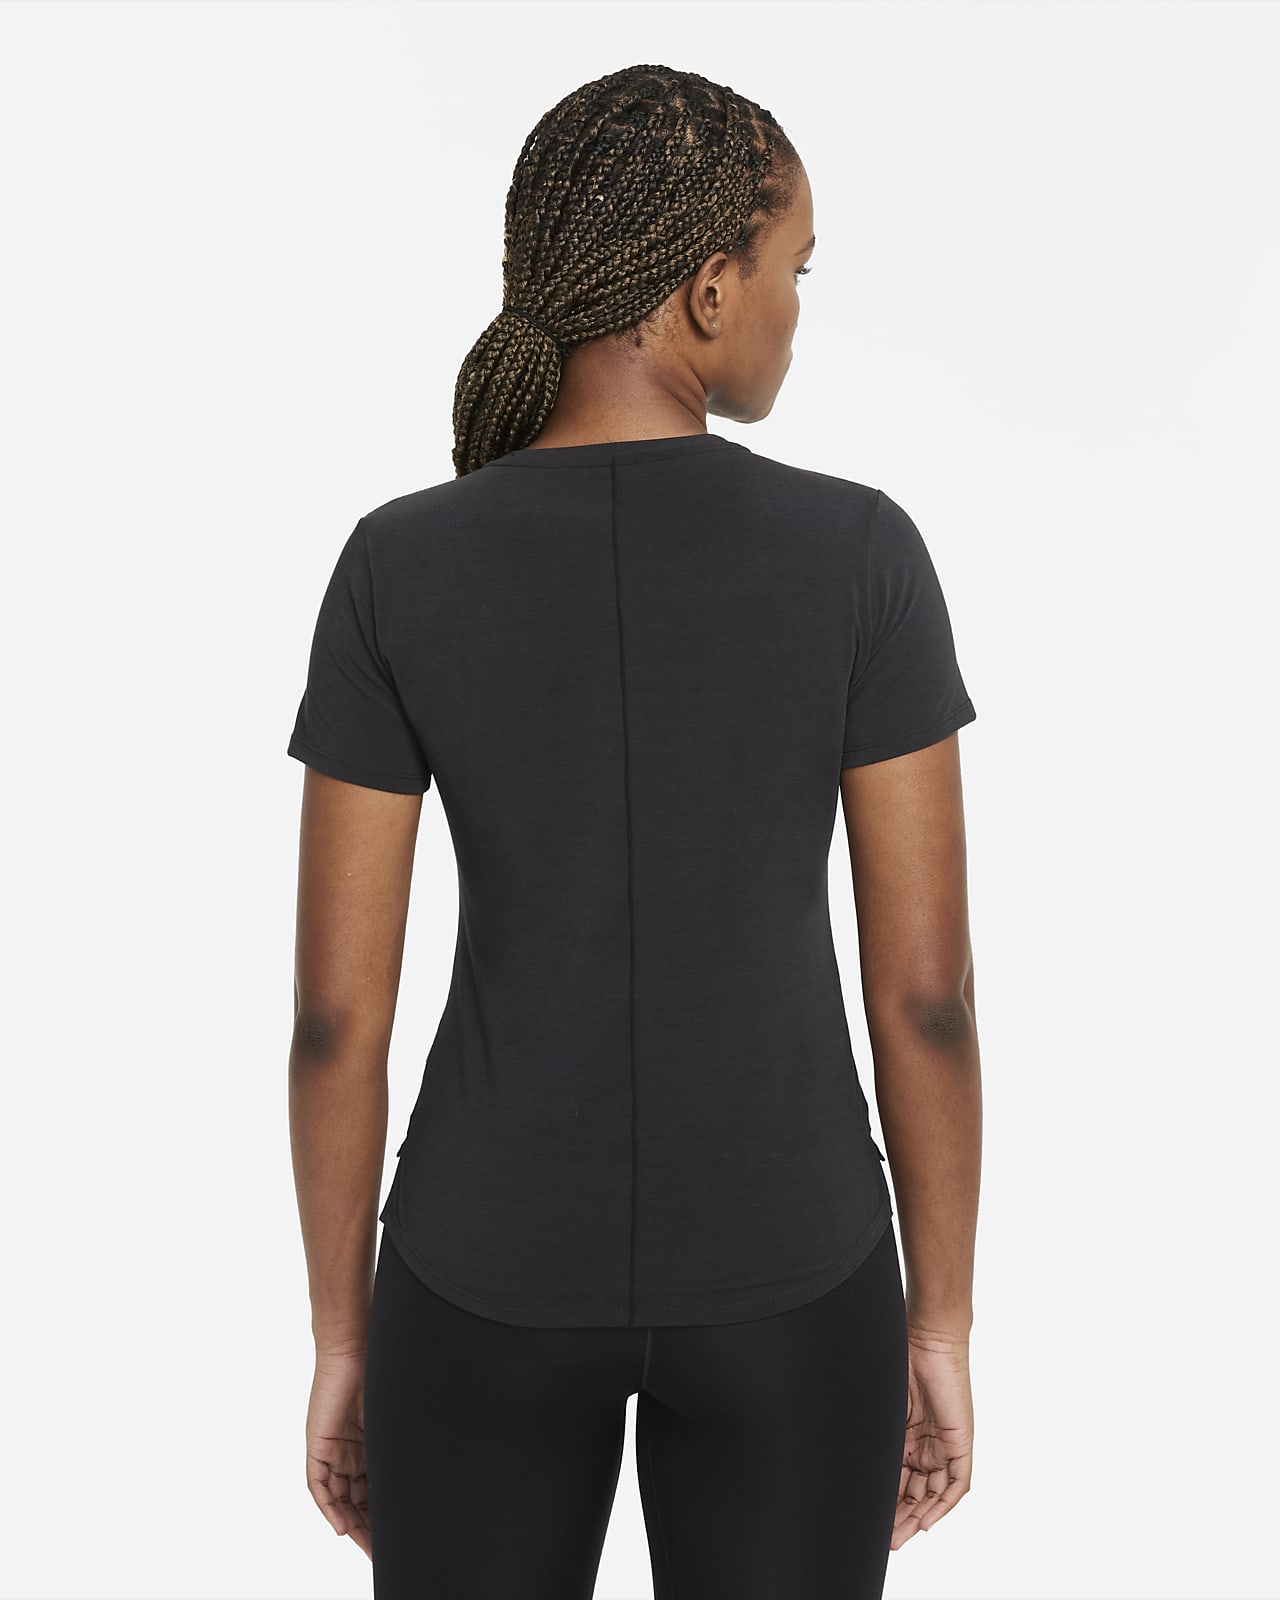 Short-Sleeve Fit Women\'s Standard Luxe Nike UV Dri-FIT Top. One